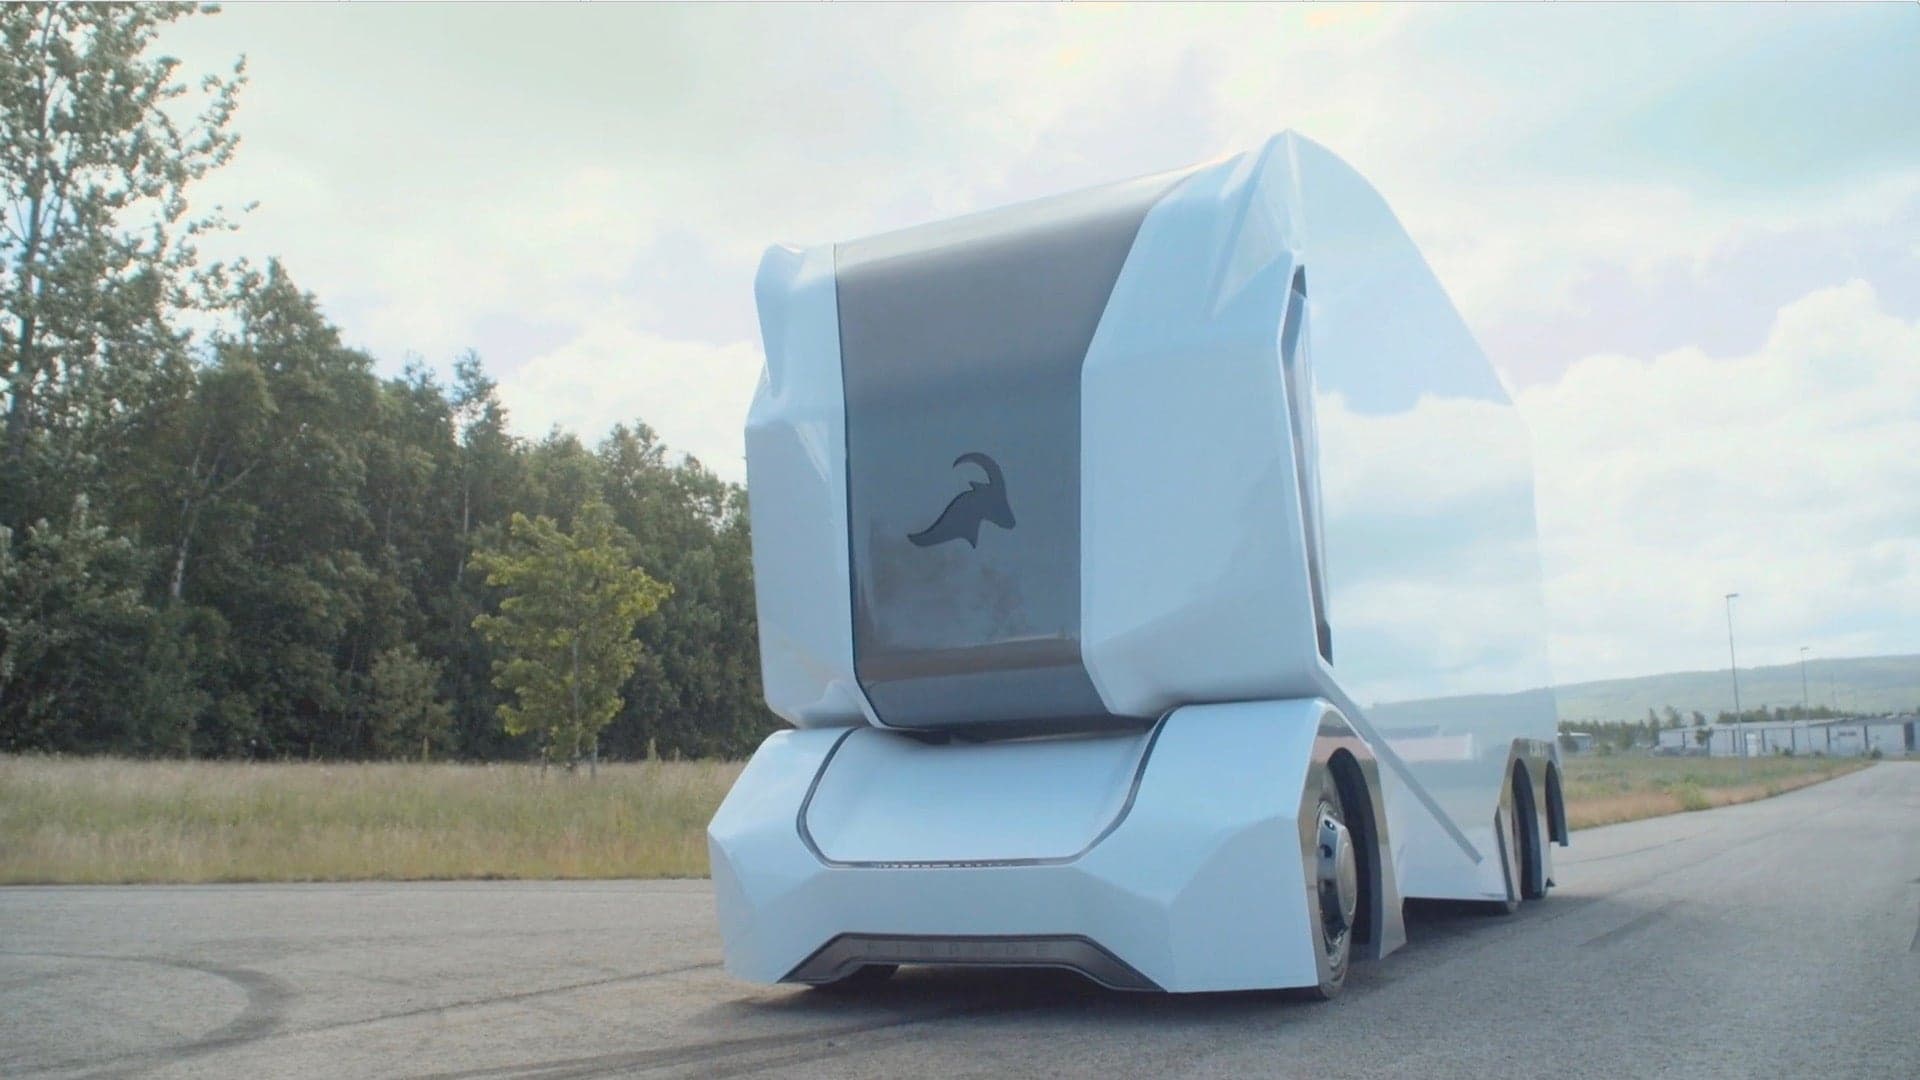 Mobility Startup Plans Commercial Autonomous Trucking Service in Future-Ready Dubai